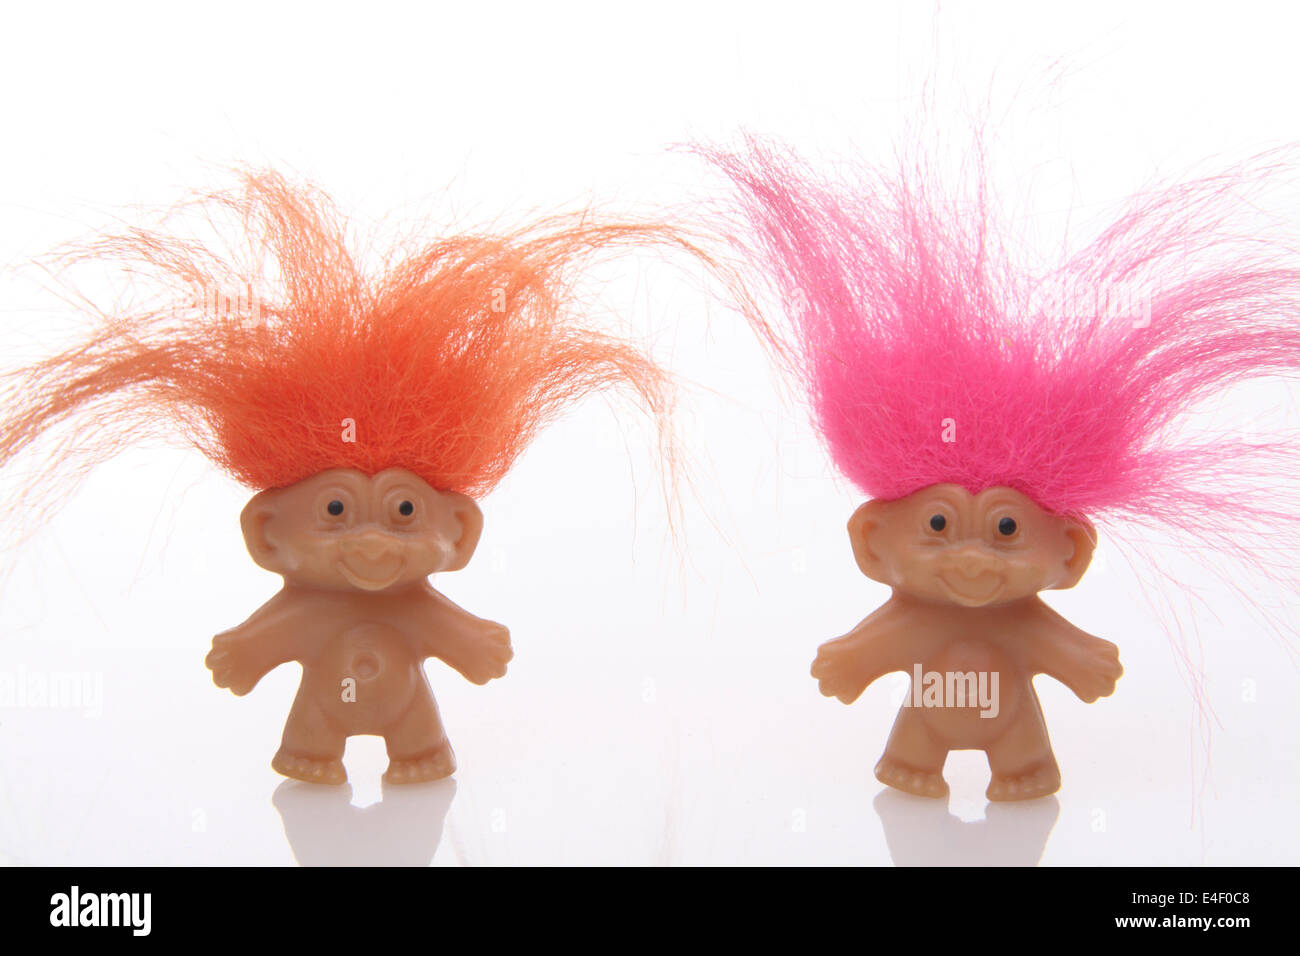 Puppen Spielzeug troll Stockfotografie - Alamy